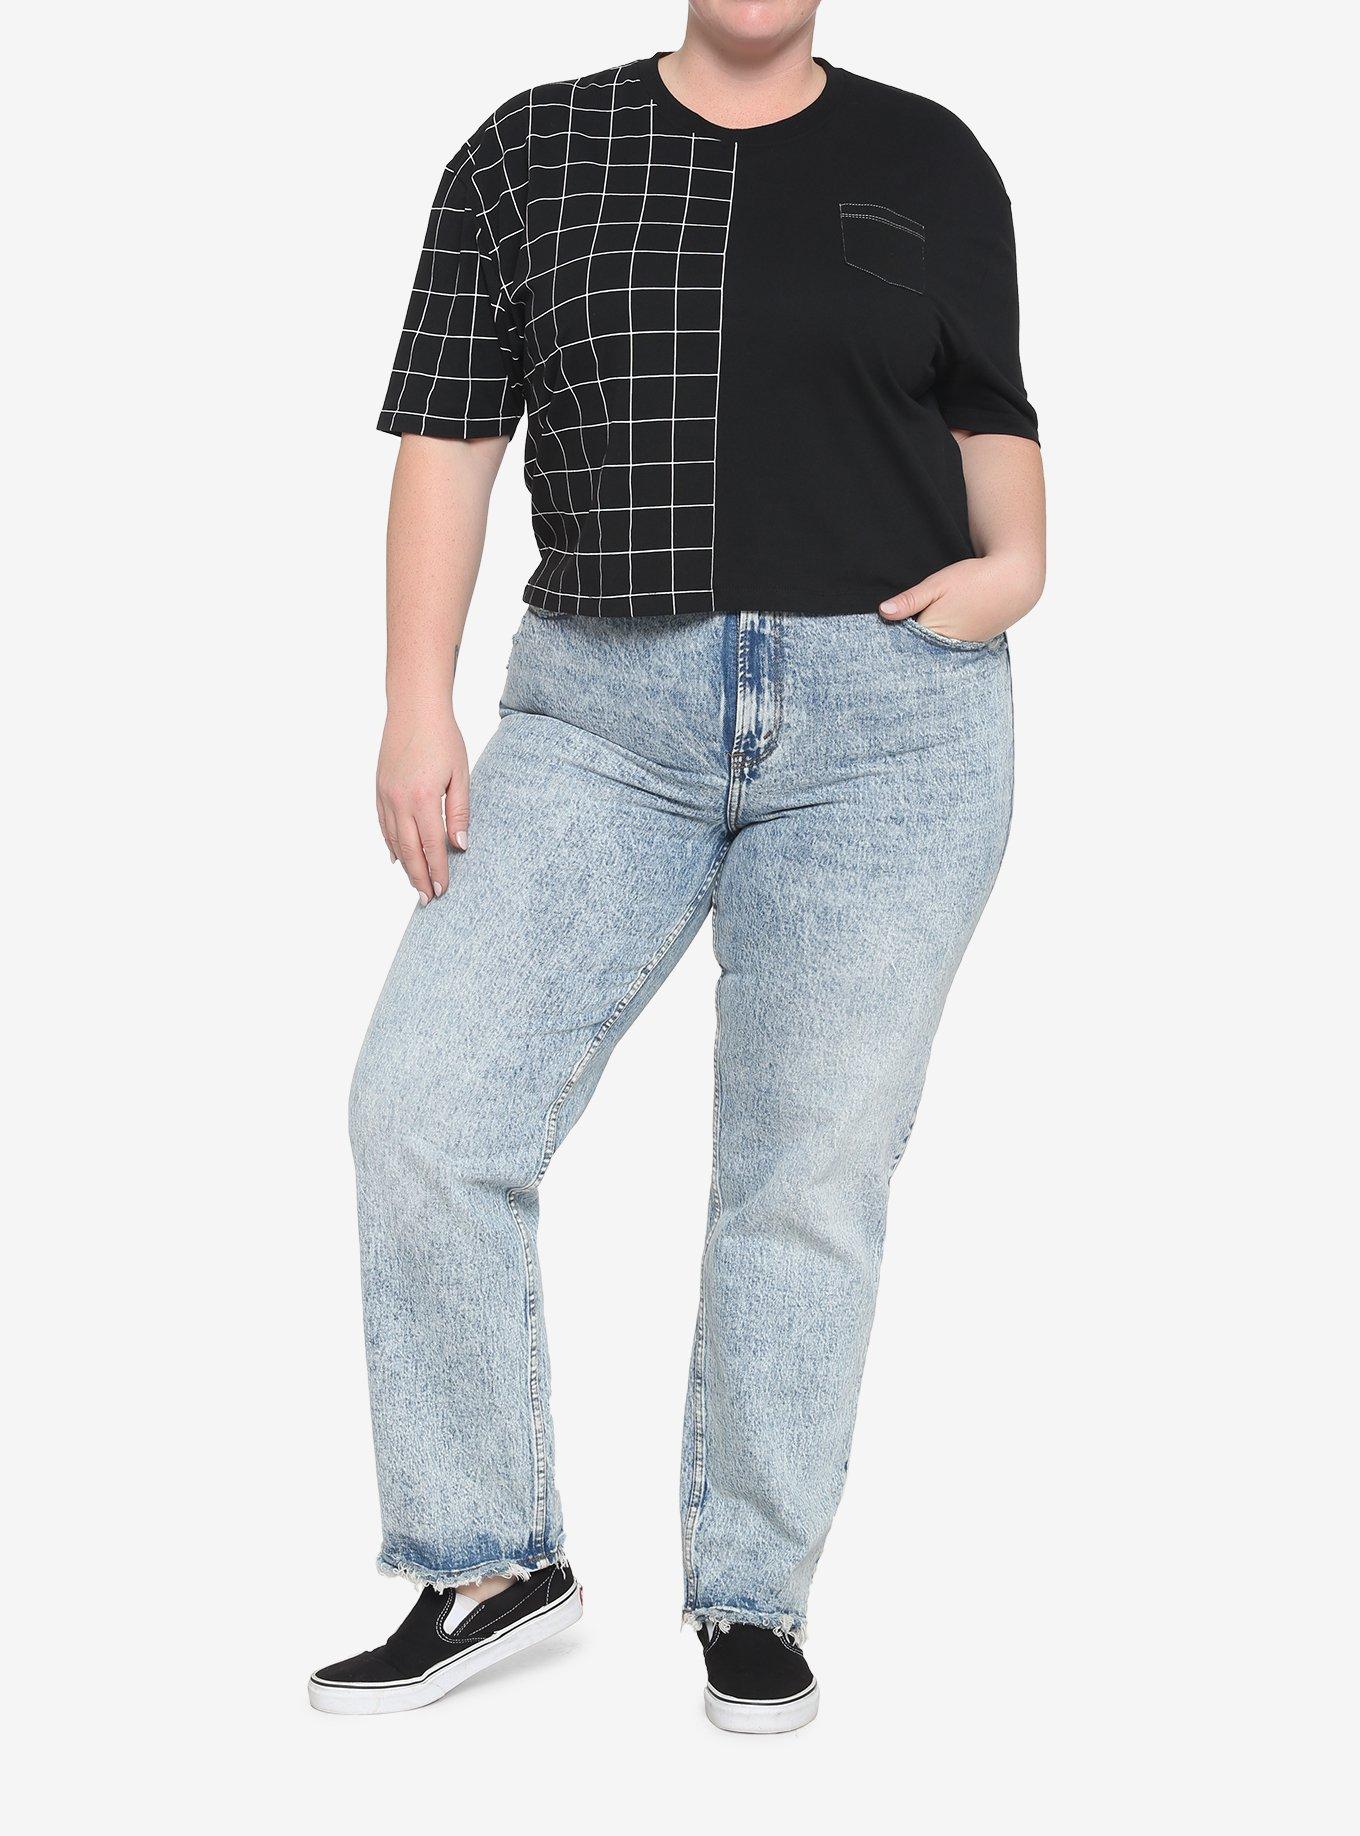 Black & White Grid Split Girls Boxy Crop T-Shirt Plus Size, BLACK, alternate